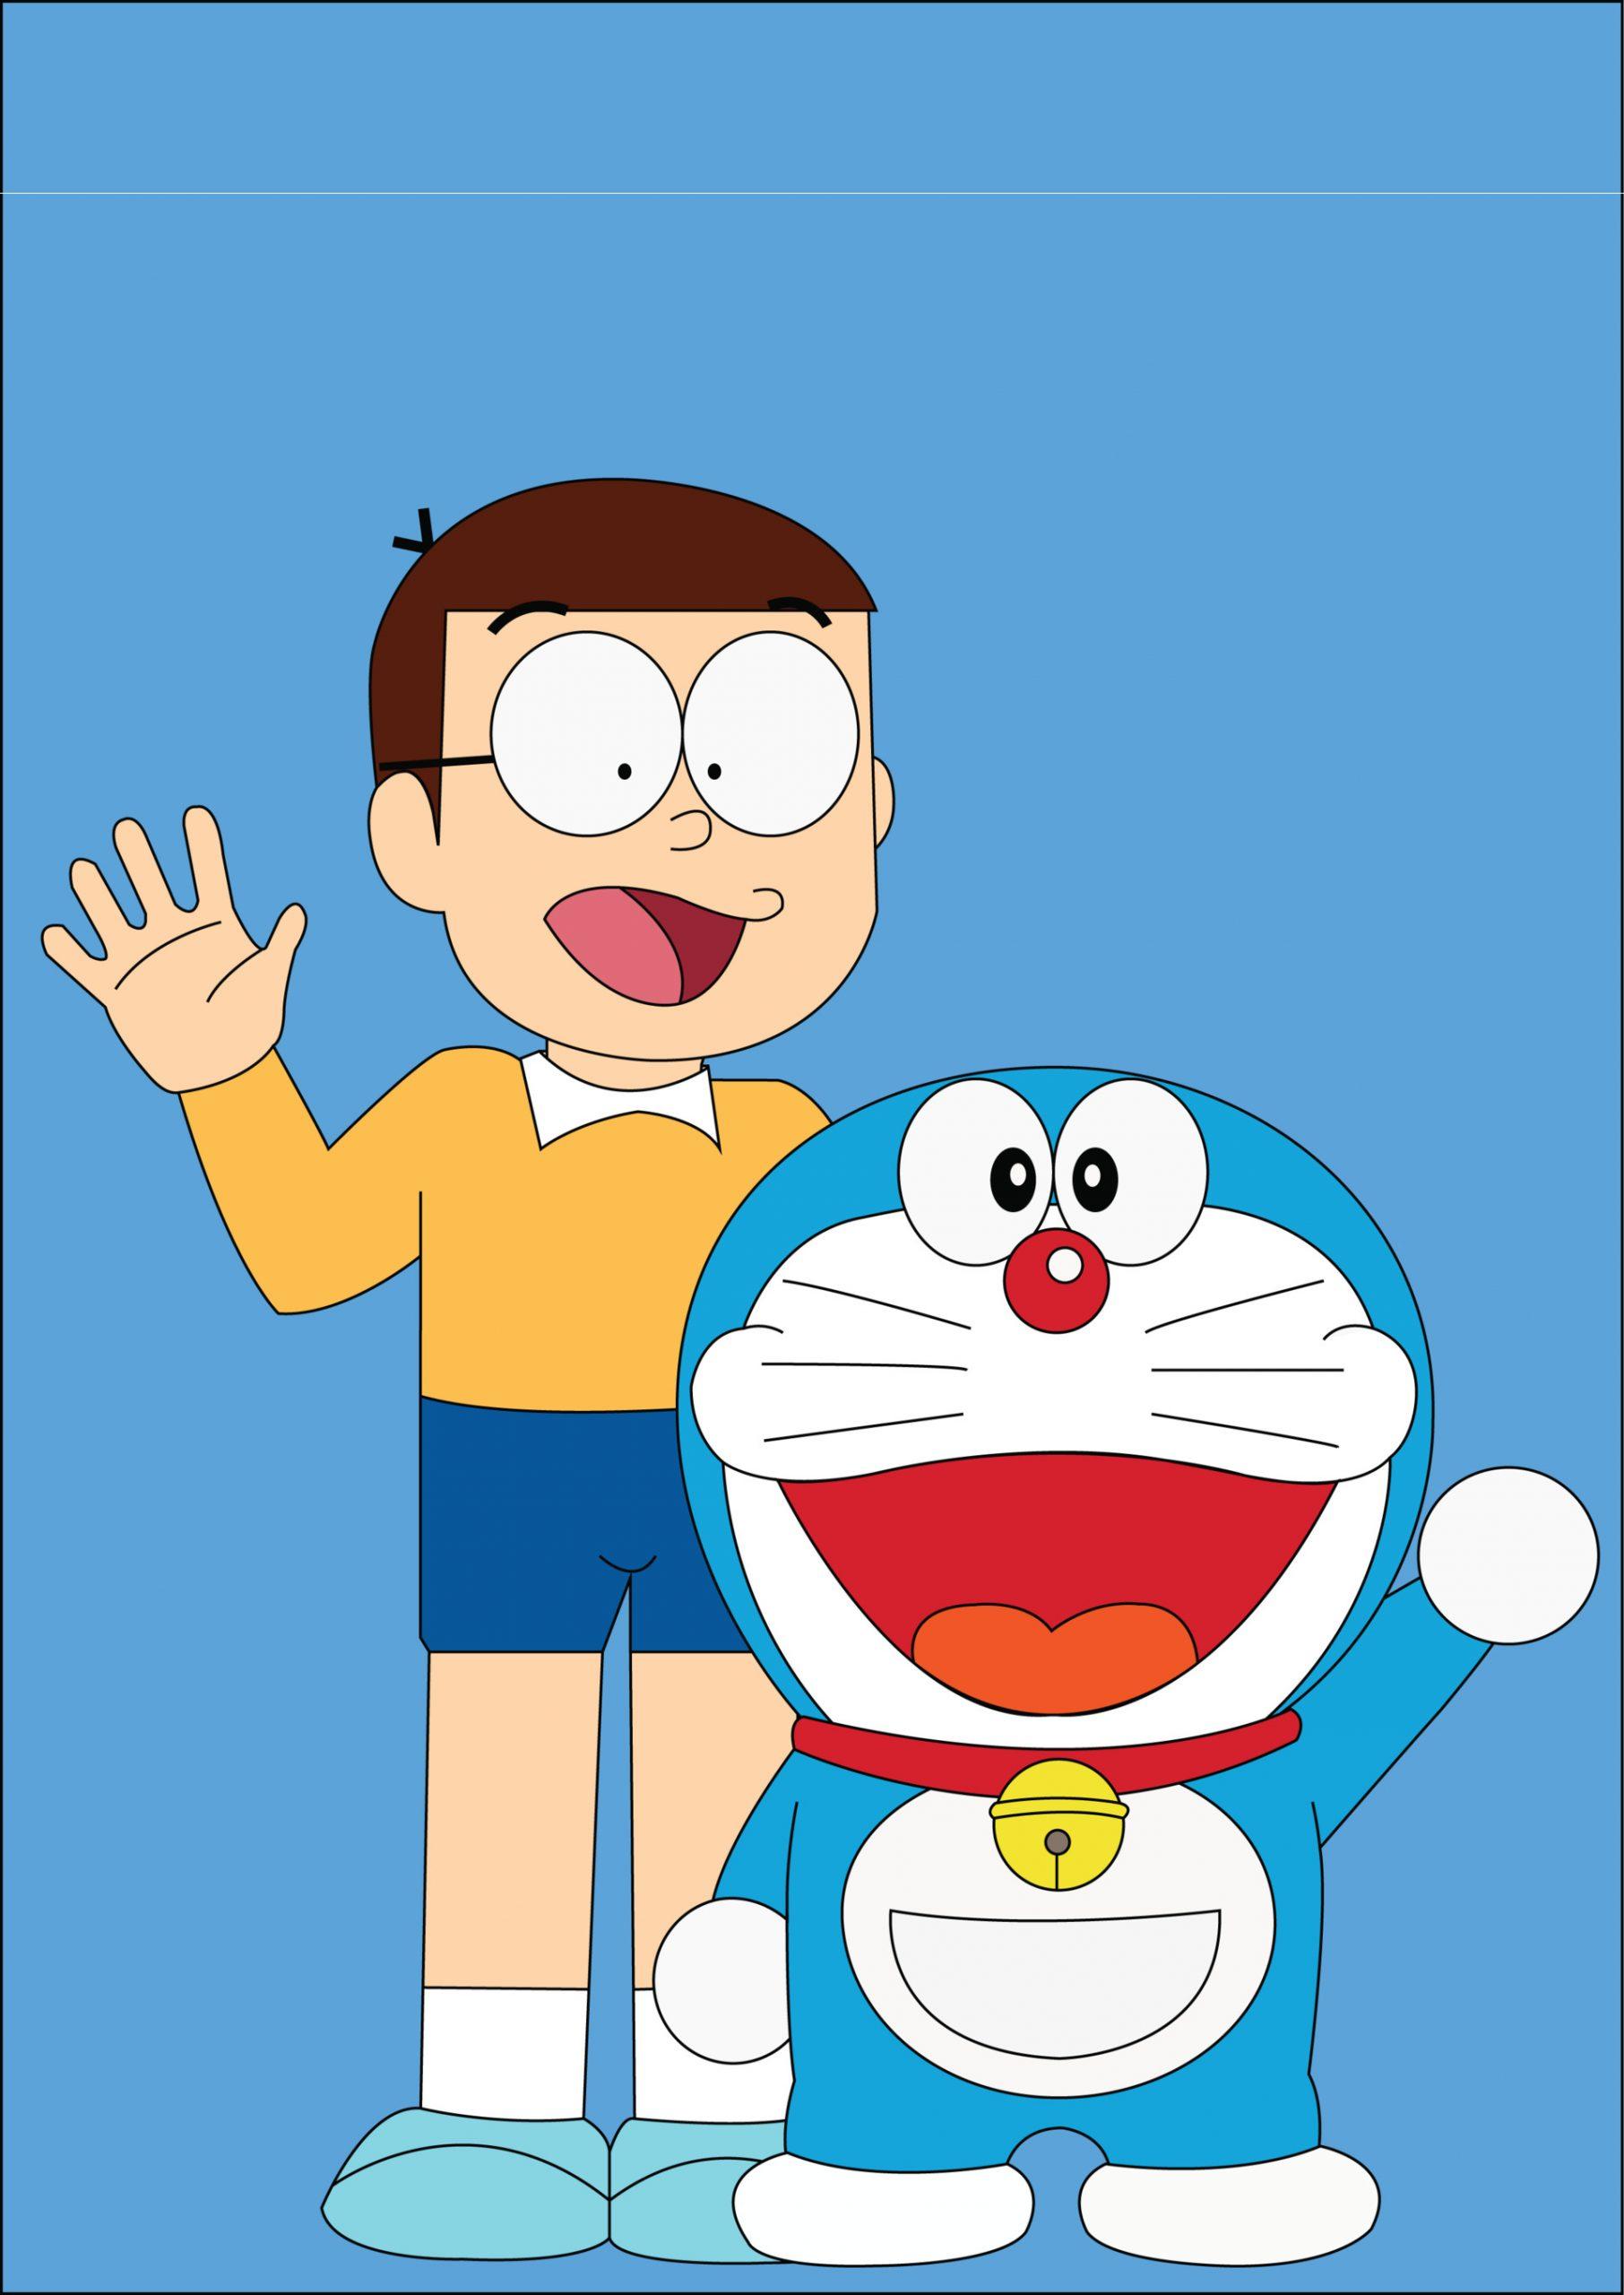 Cute Nobita Wallpapers Top Free Cute Nobita Backgrounds Wallpaperaccess 8899